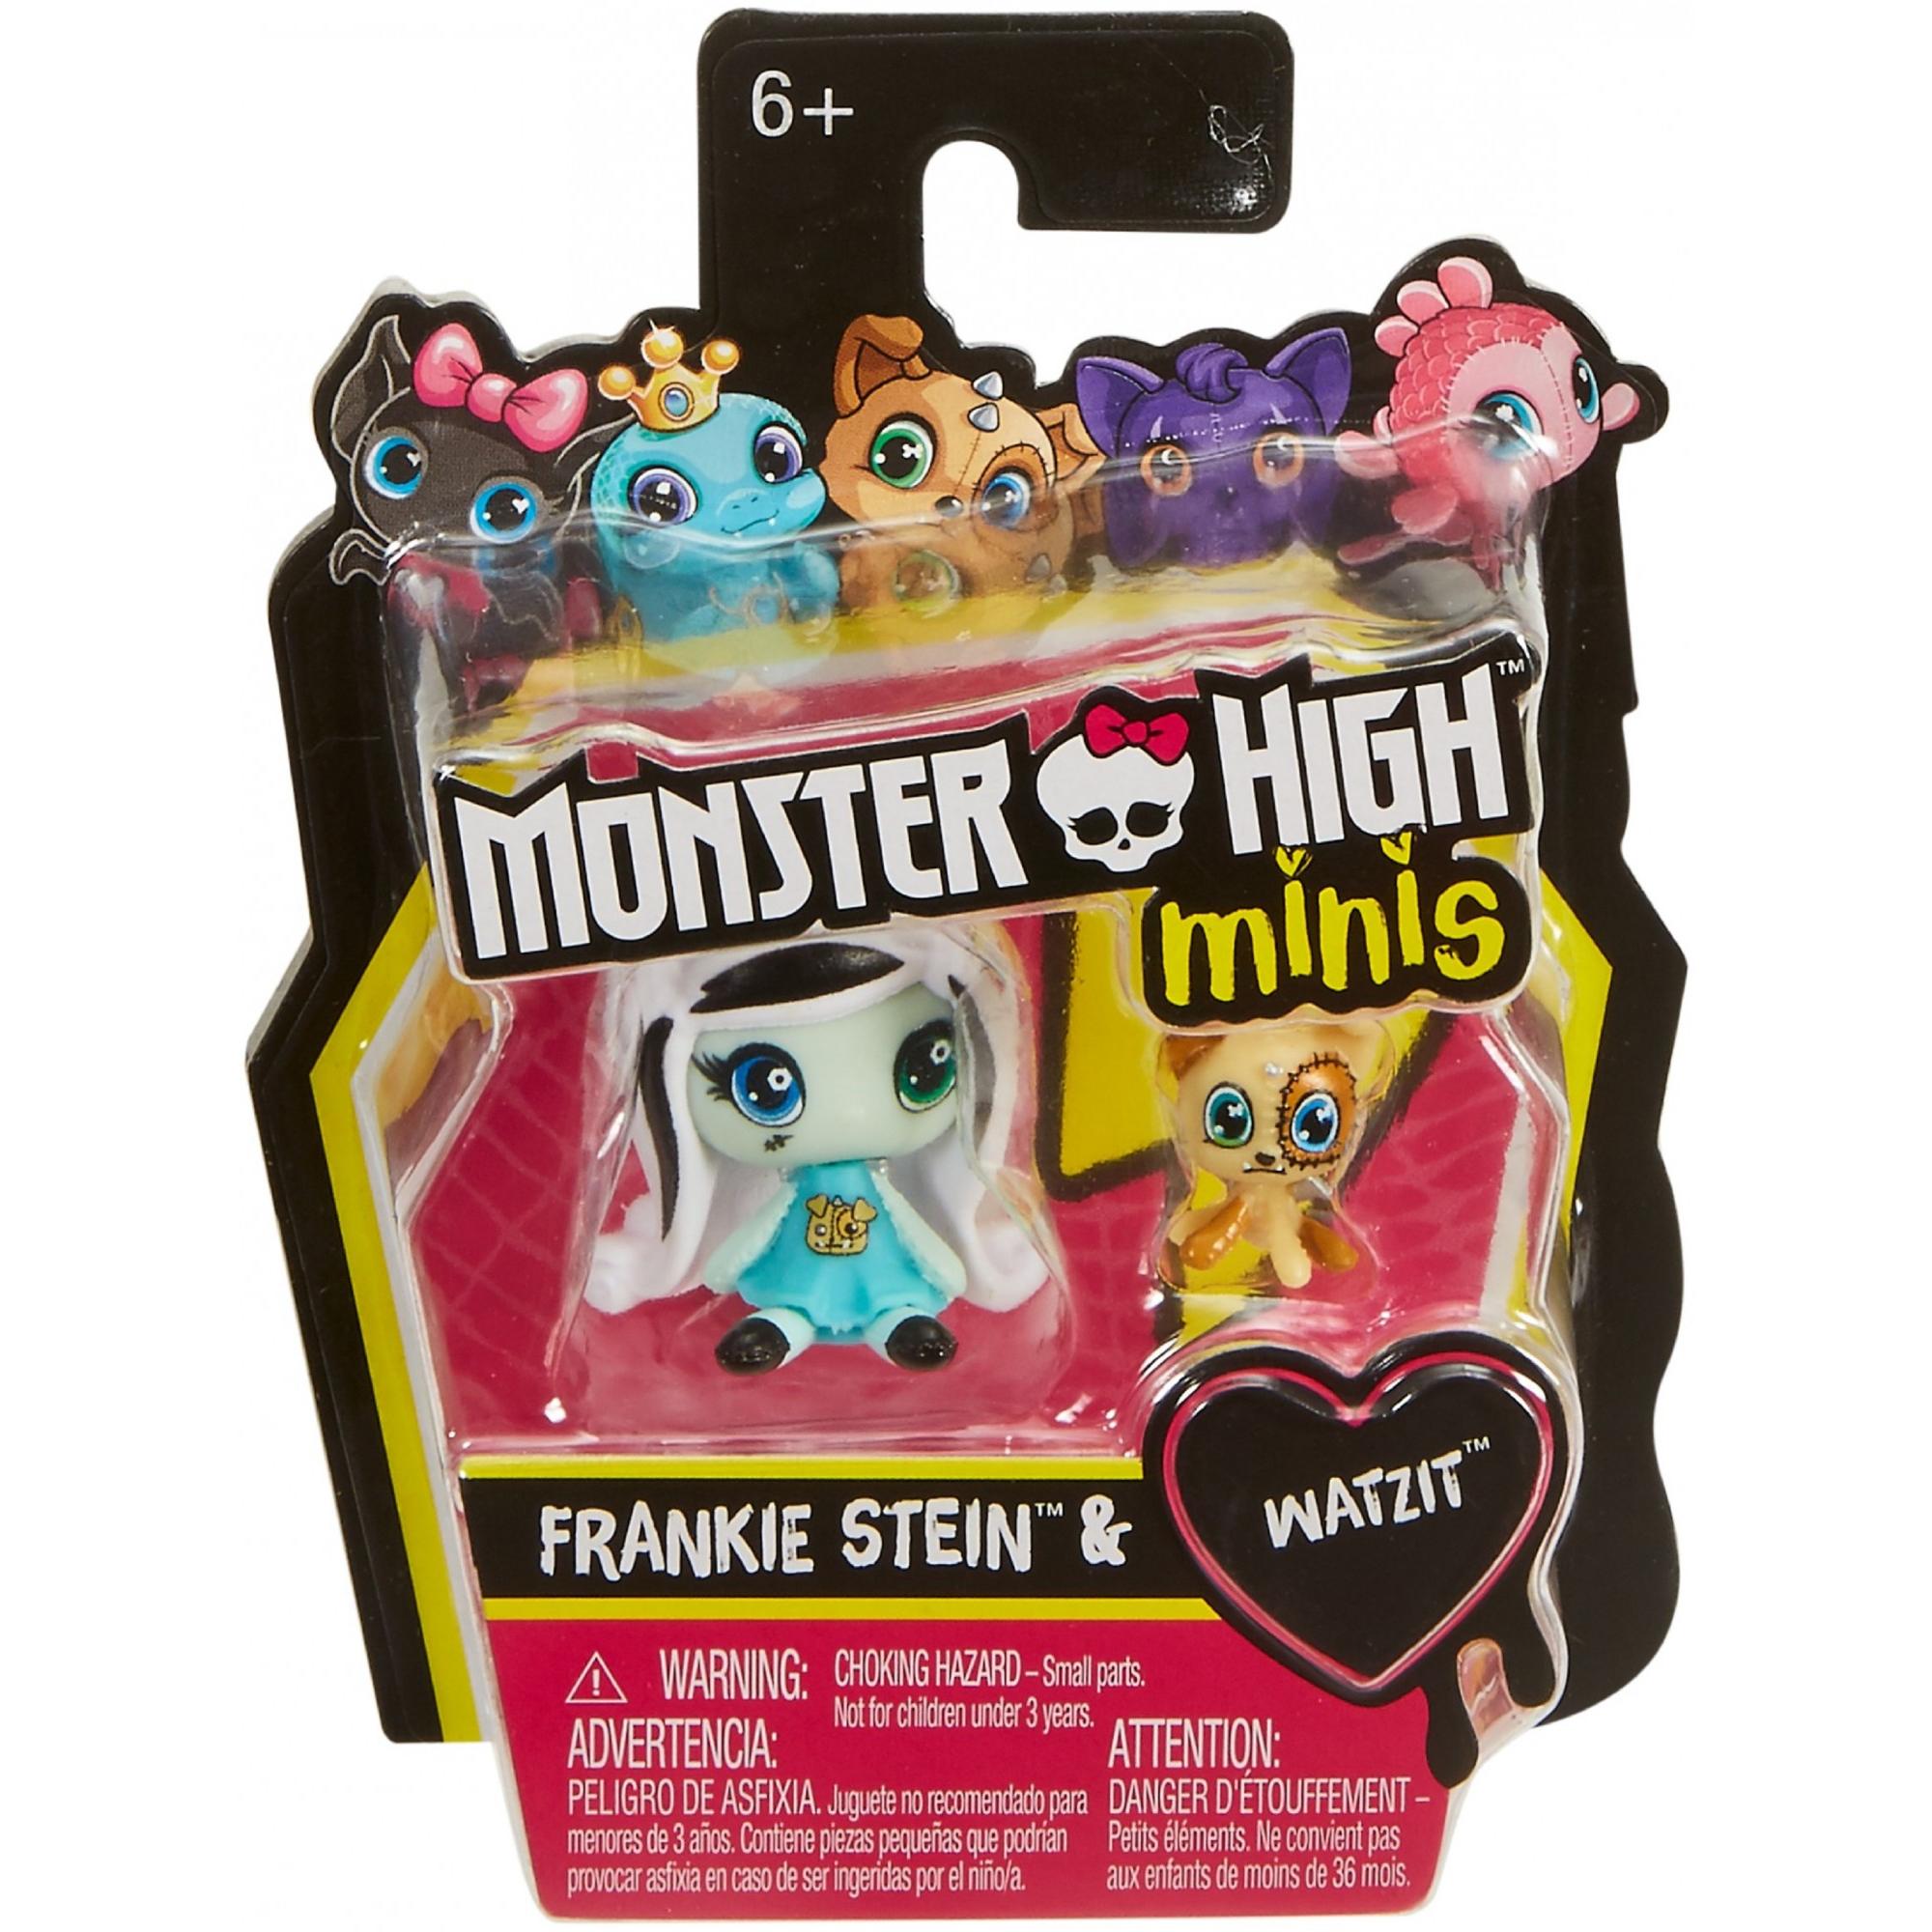 Monster High Minis Frankie Stein & Watzit Figures - image 3 of 4